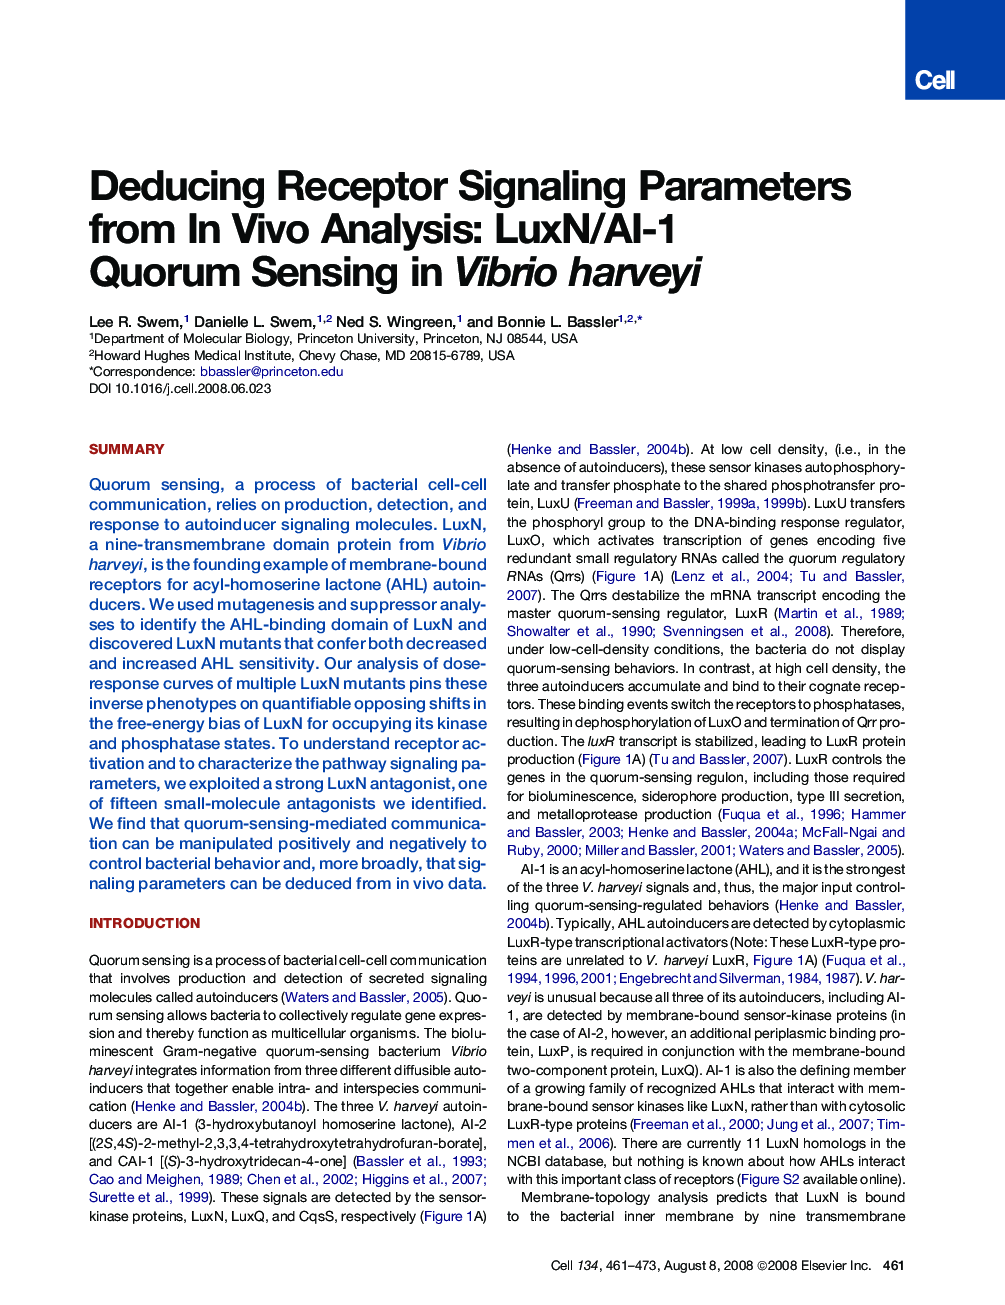 Deducing Receptor Signaling Parameters from In Vivo Analysis: LuxN/AI-1 Quorum Sensing in Vibrio harveyi